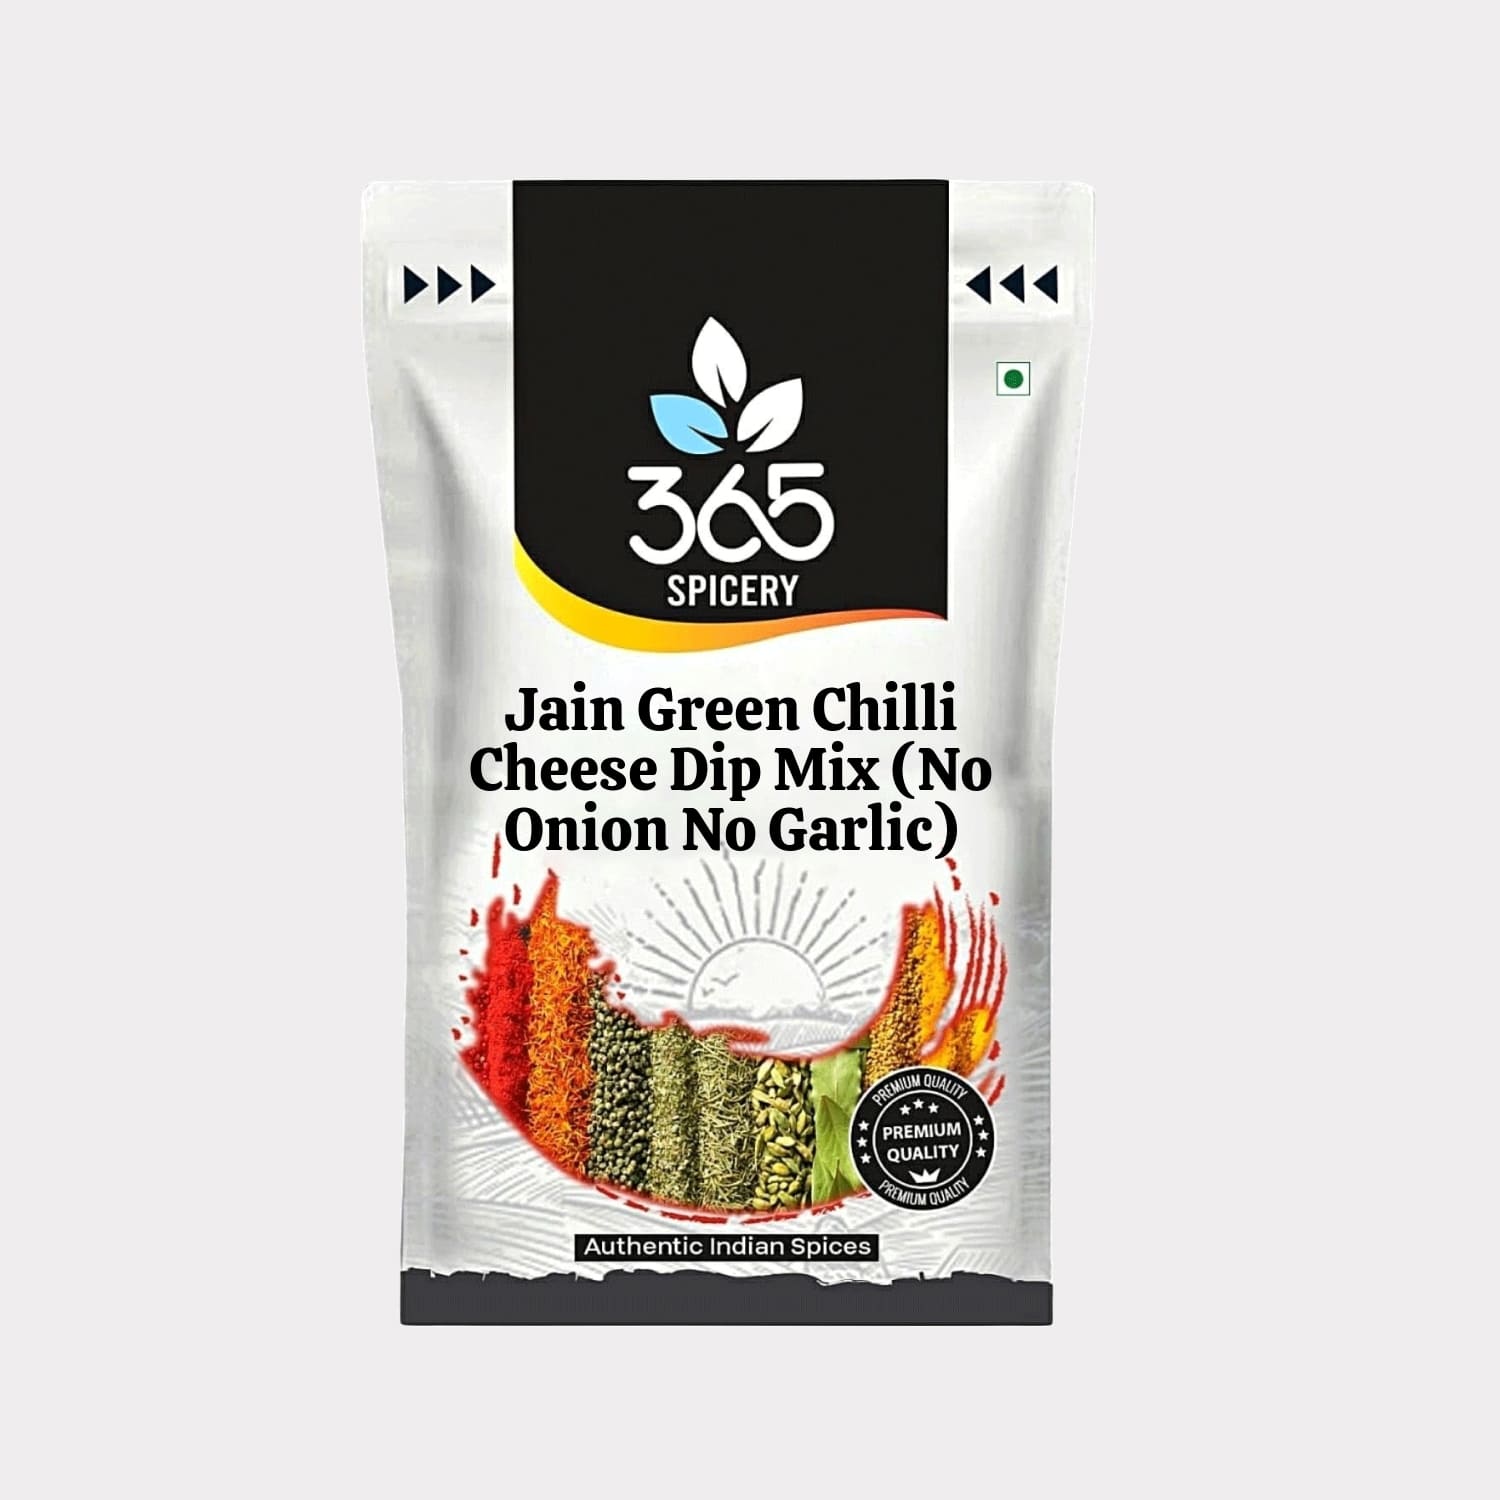 Jain Green Chilli Cheese Dip Mix (No Onion No Garlic)